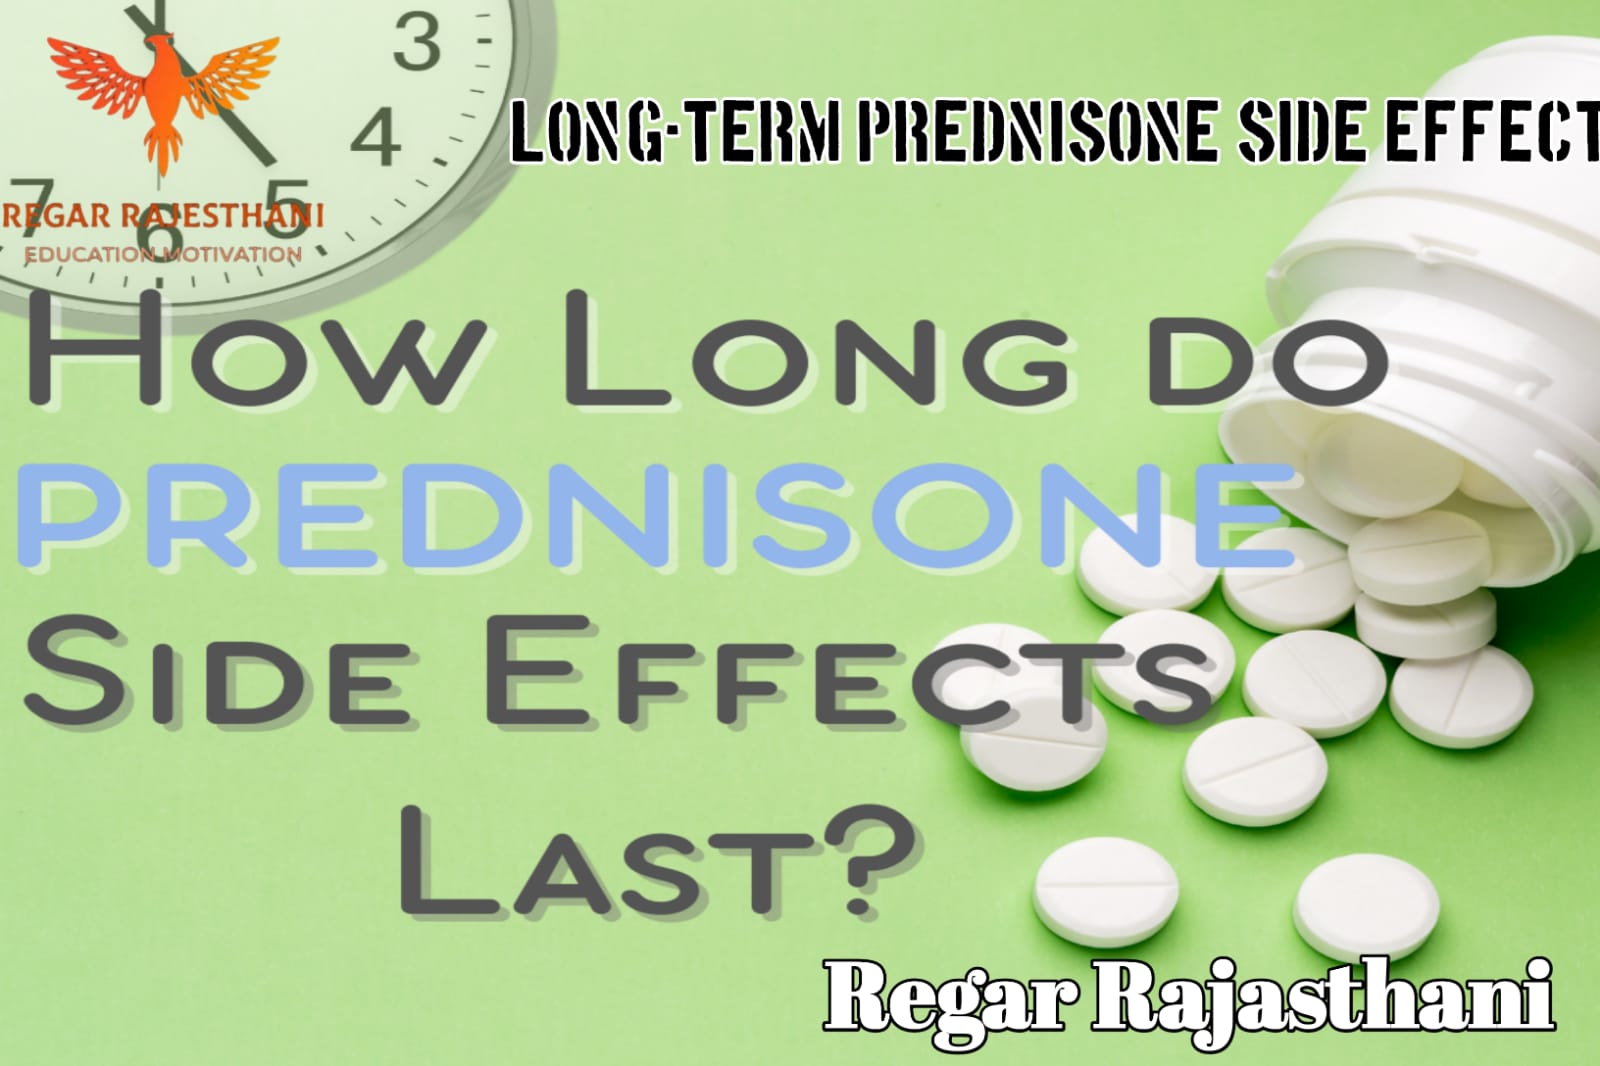 How long do prednisone side effects last?